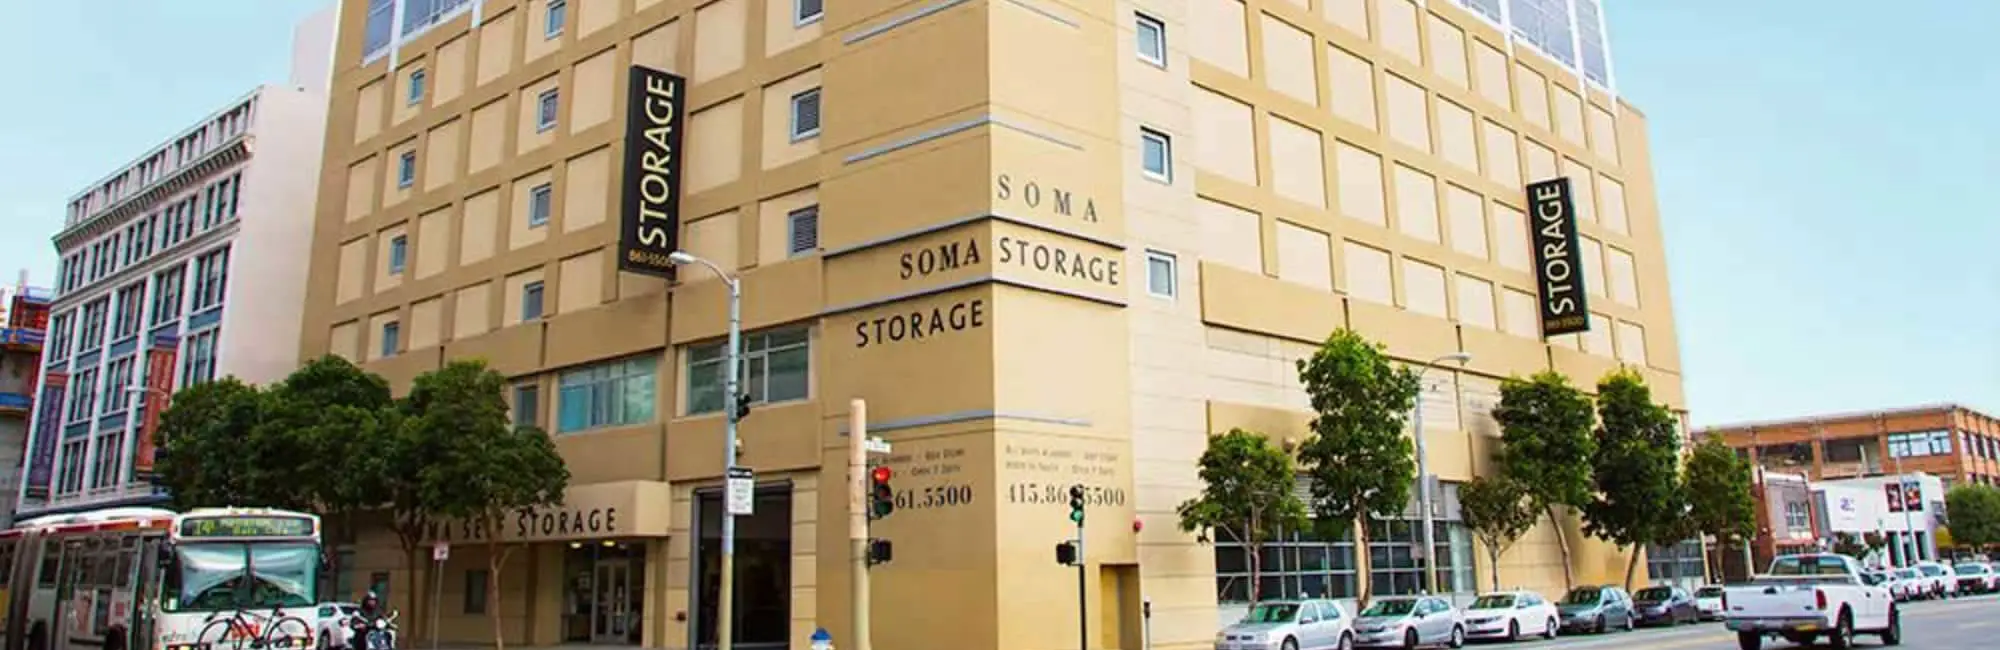 Amazing Storages of San Francisco